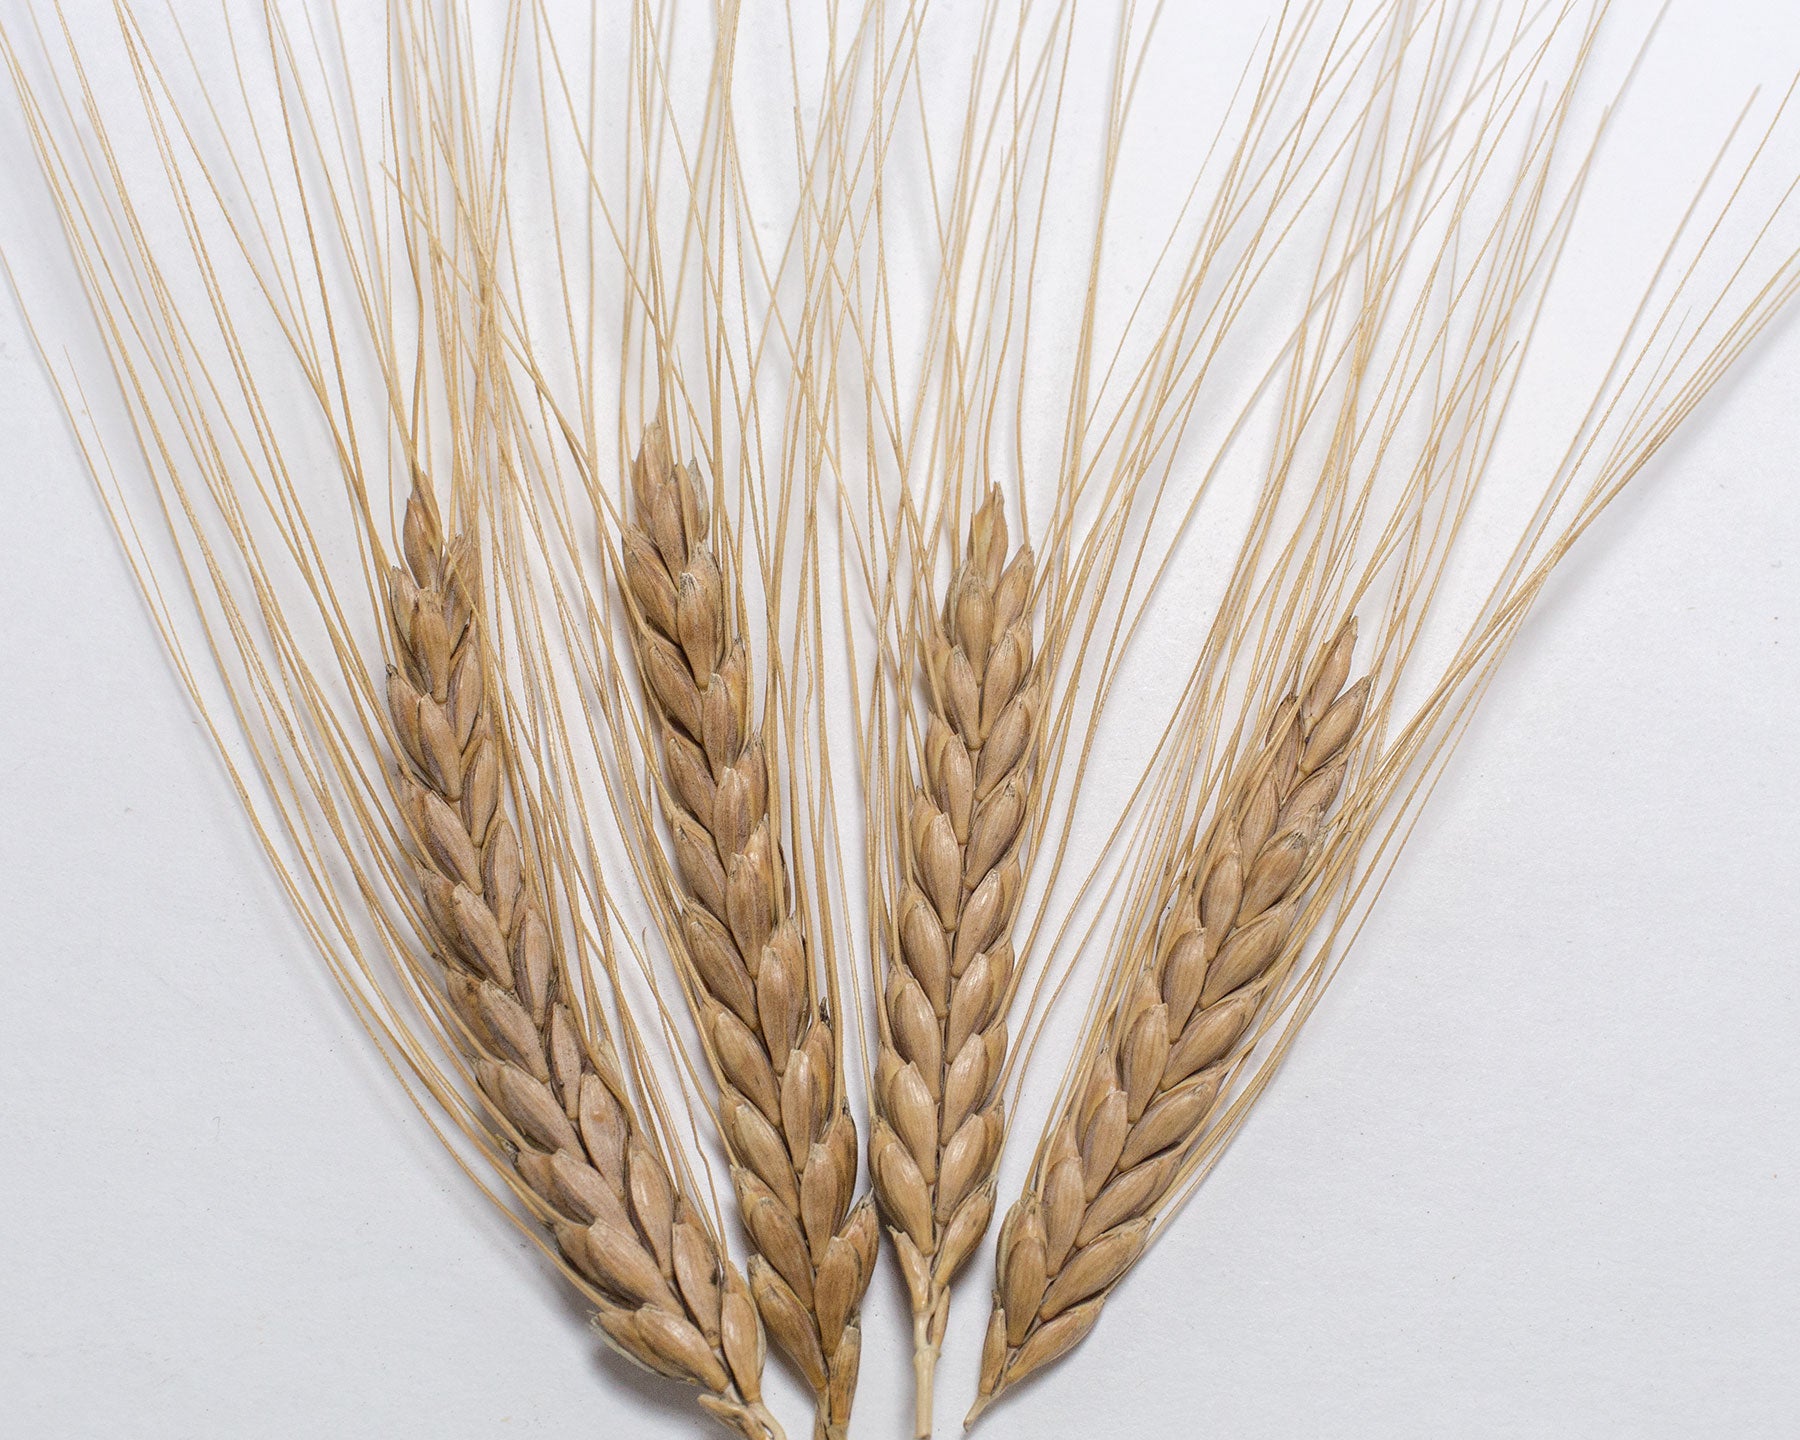 Wheat (Emmer) - Erythrurum